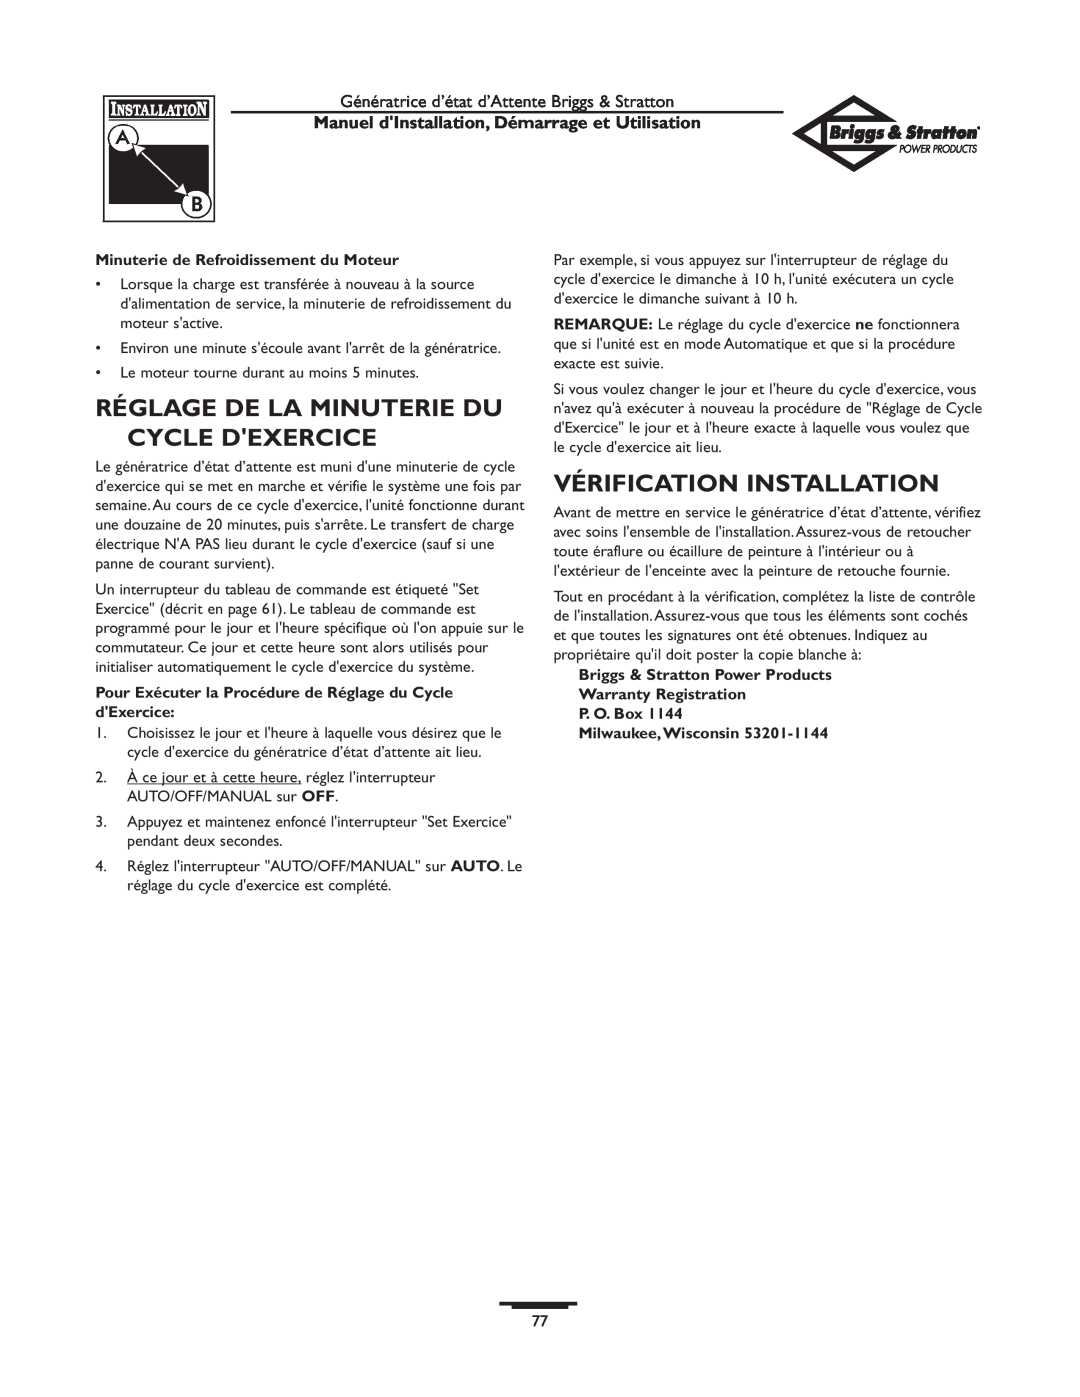 Briggs & Stratton 01897-0 manual Réglage De La Minuterie Du Cycle Dexercice, Vérification Installation 